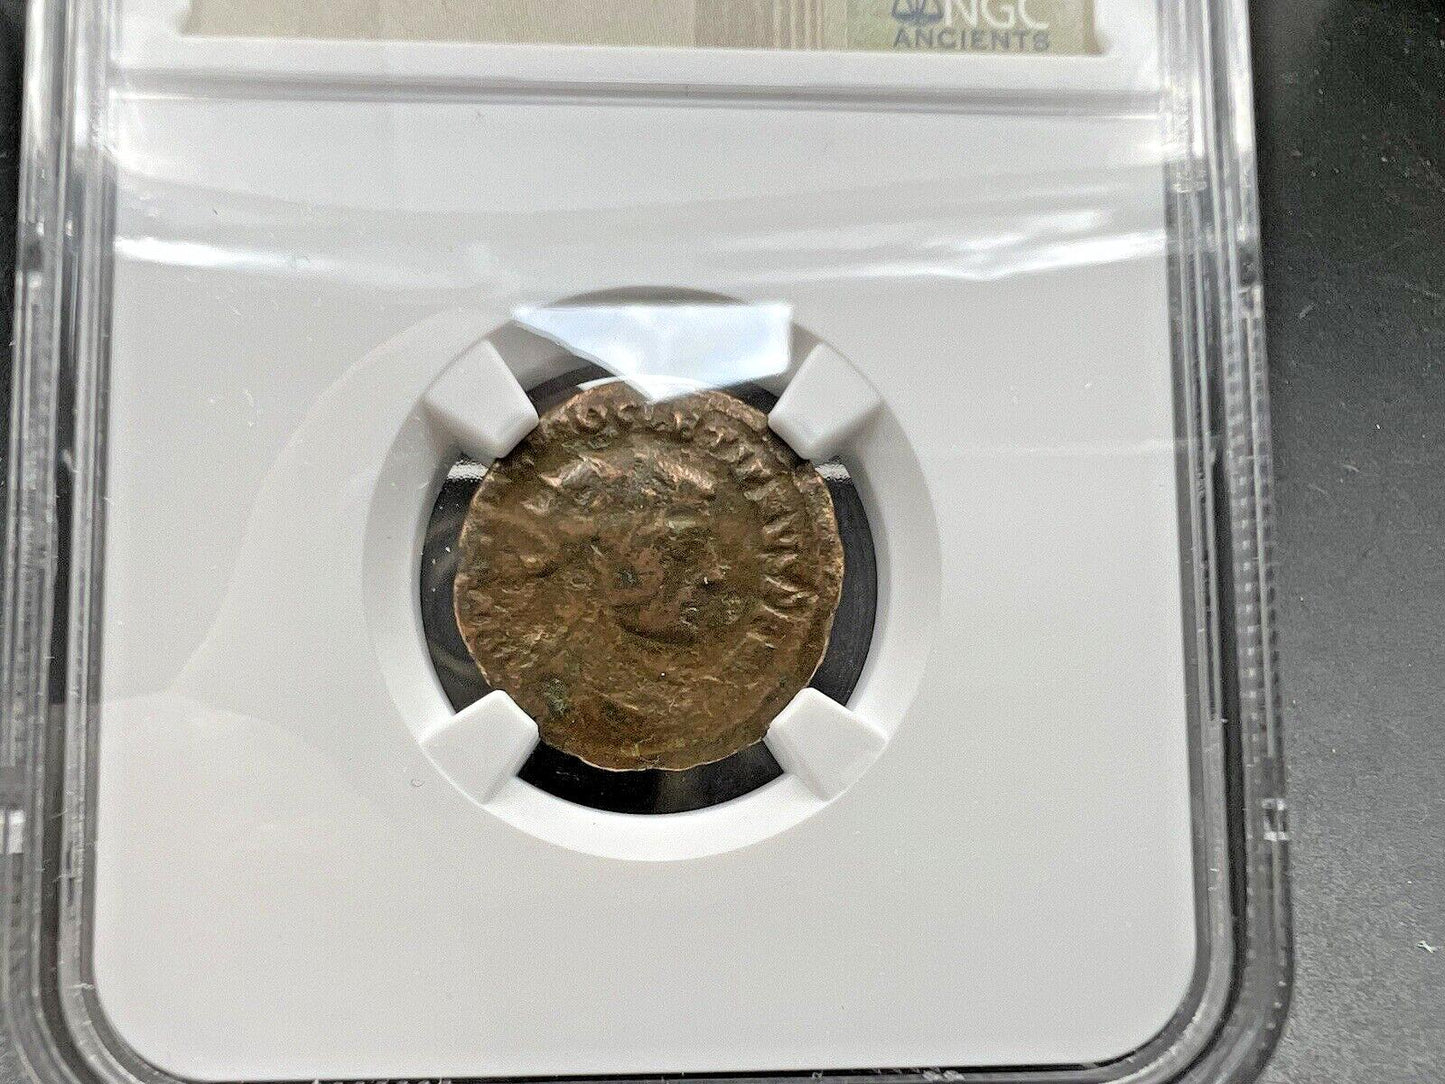 The ROMAN Tetrarchy Diocletian AD 284-305 AE Radiate Rome Ancient bronze coin